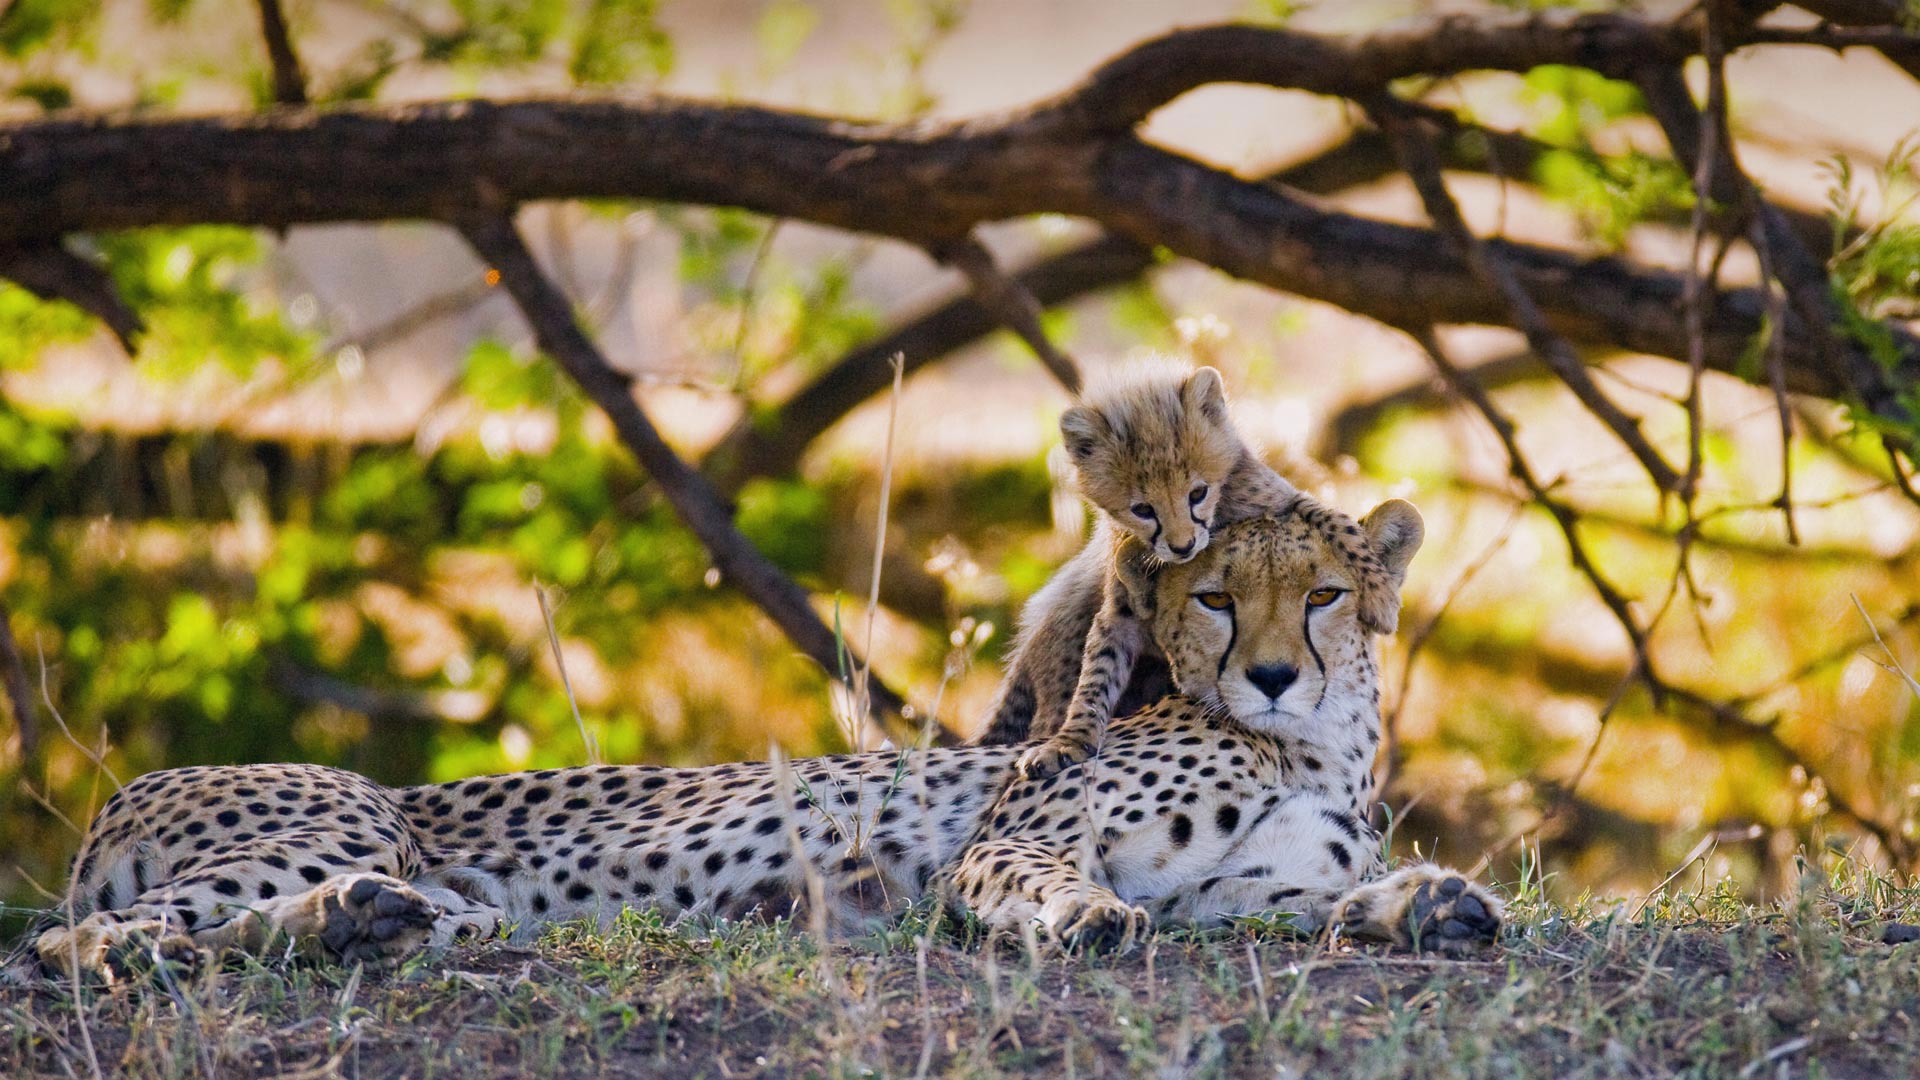 Mother cheetah and her cub in the Masai Mara National Reserve, Kenya - gudkovandrey/Adobe Stock)